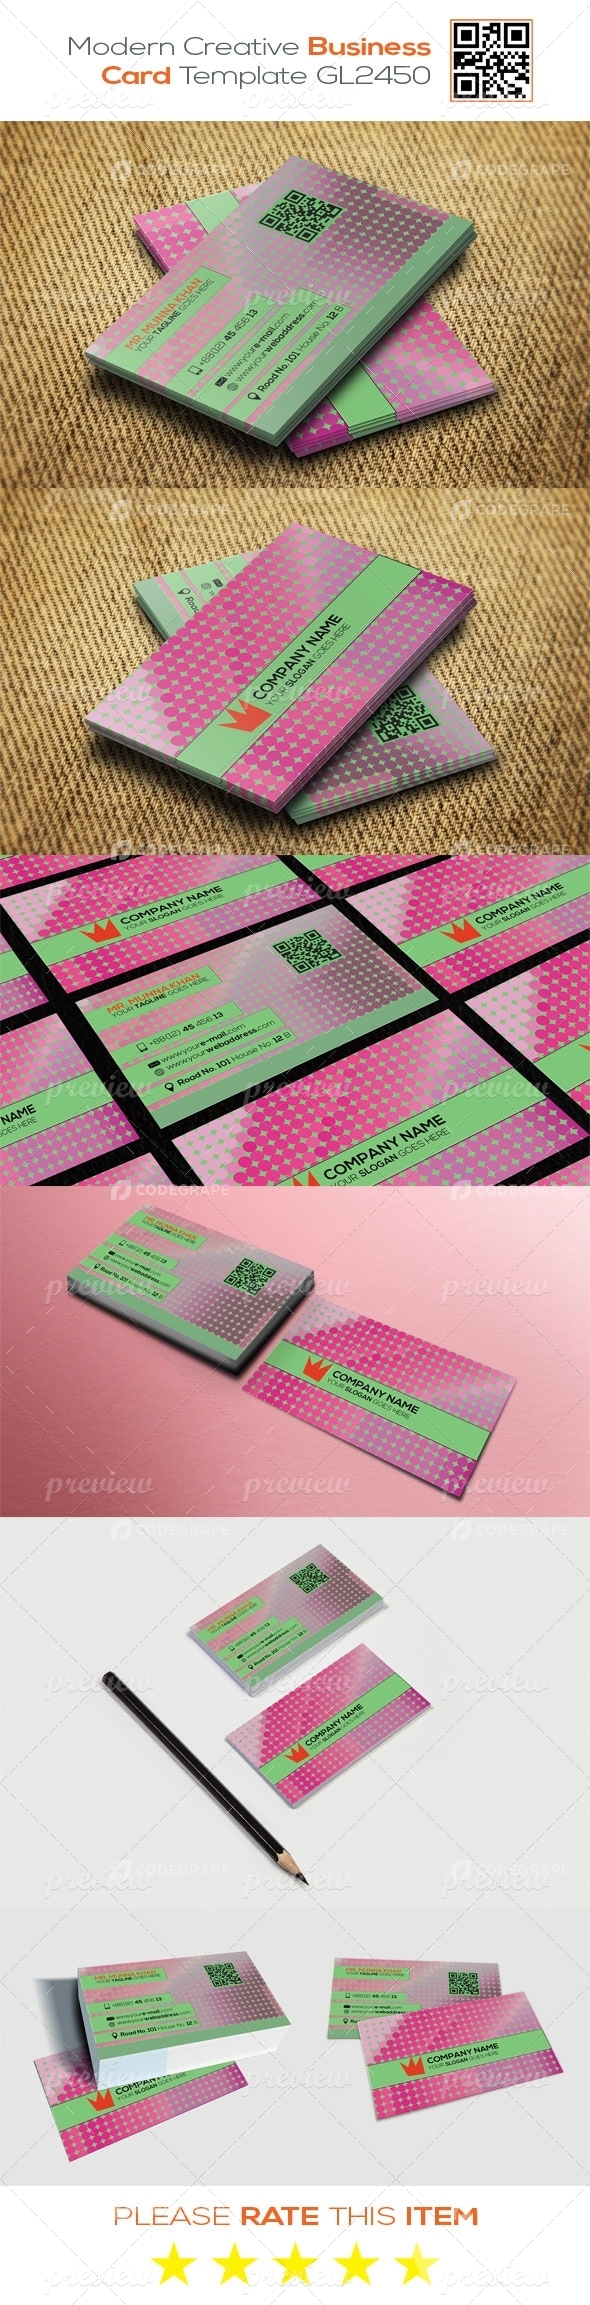 Modern Creative Business Card Template GL2450